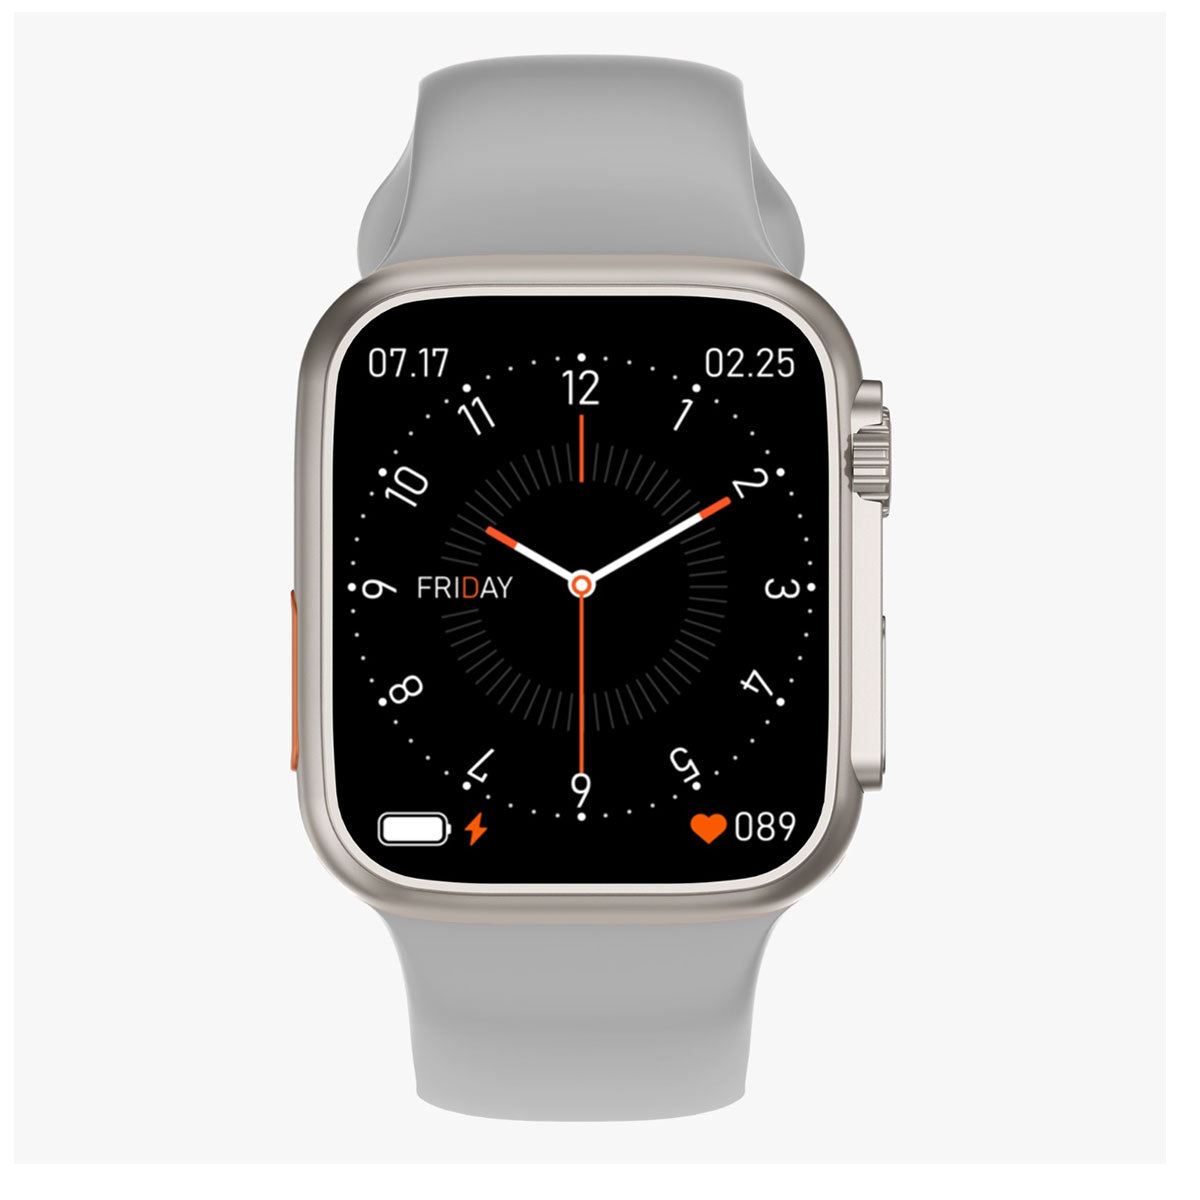 Smartwatch Reloj T905 Ultra Max Suit Fralugio 5 Correas Hr Bp